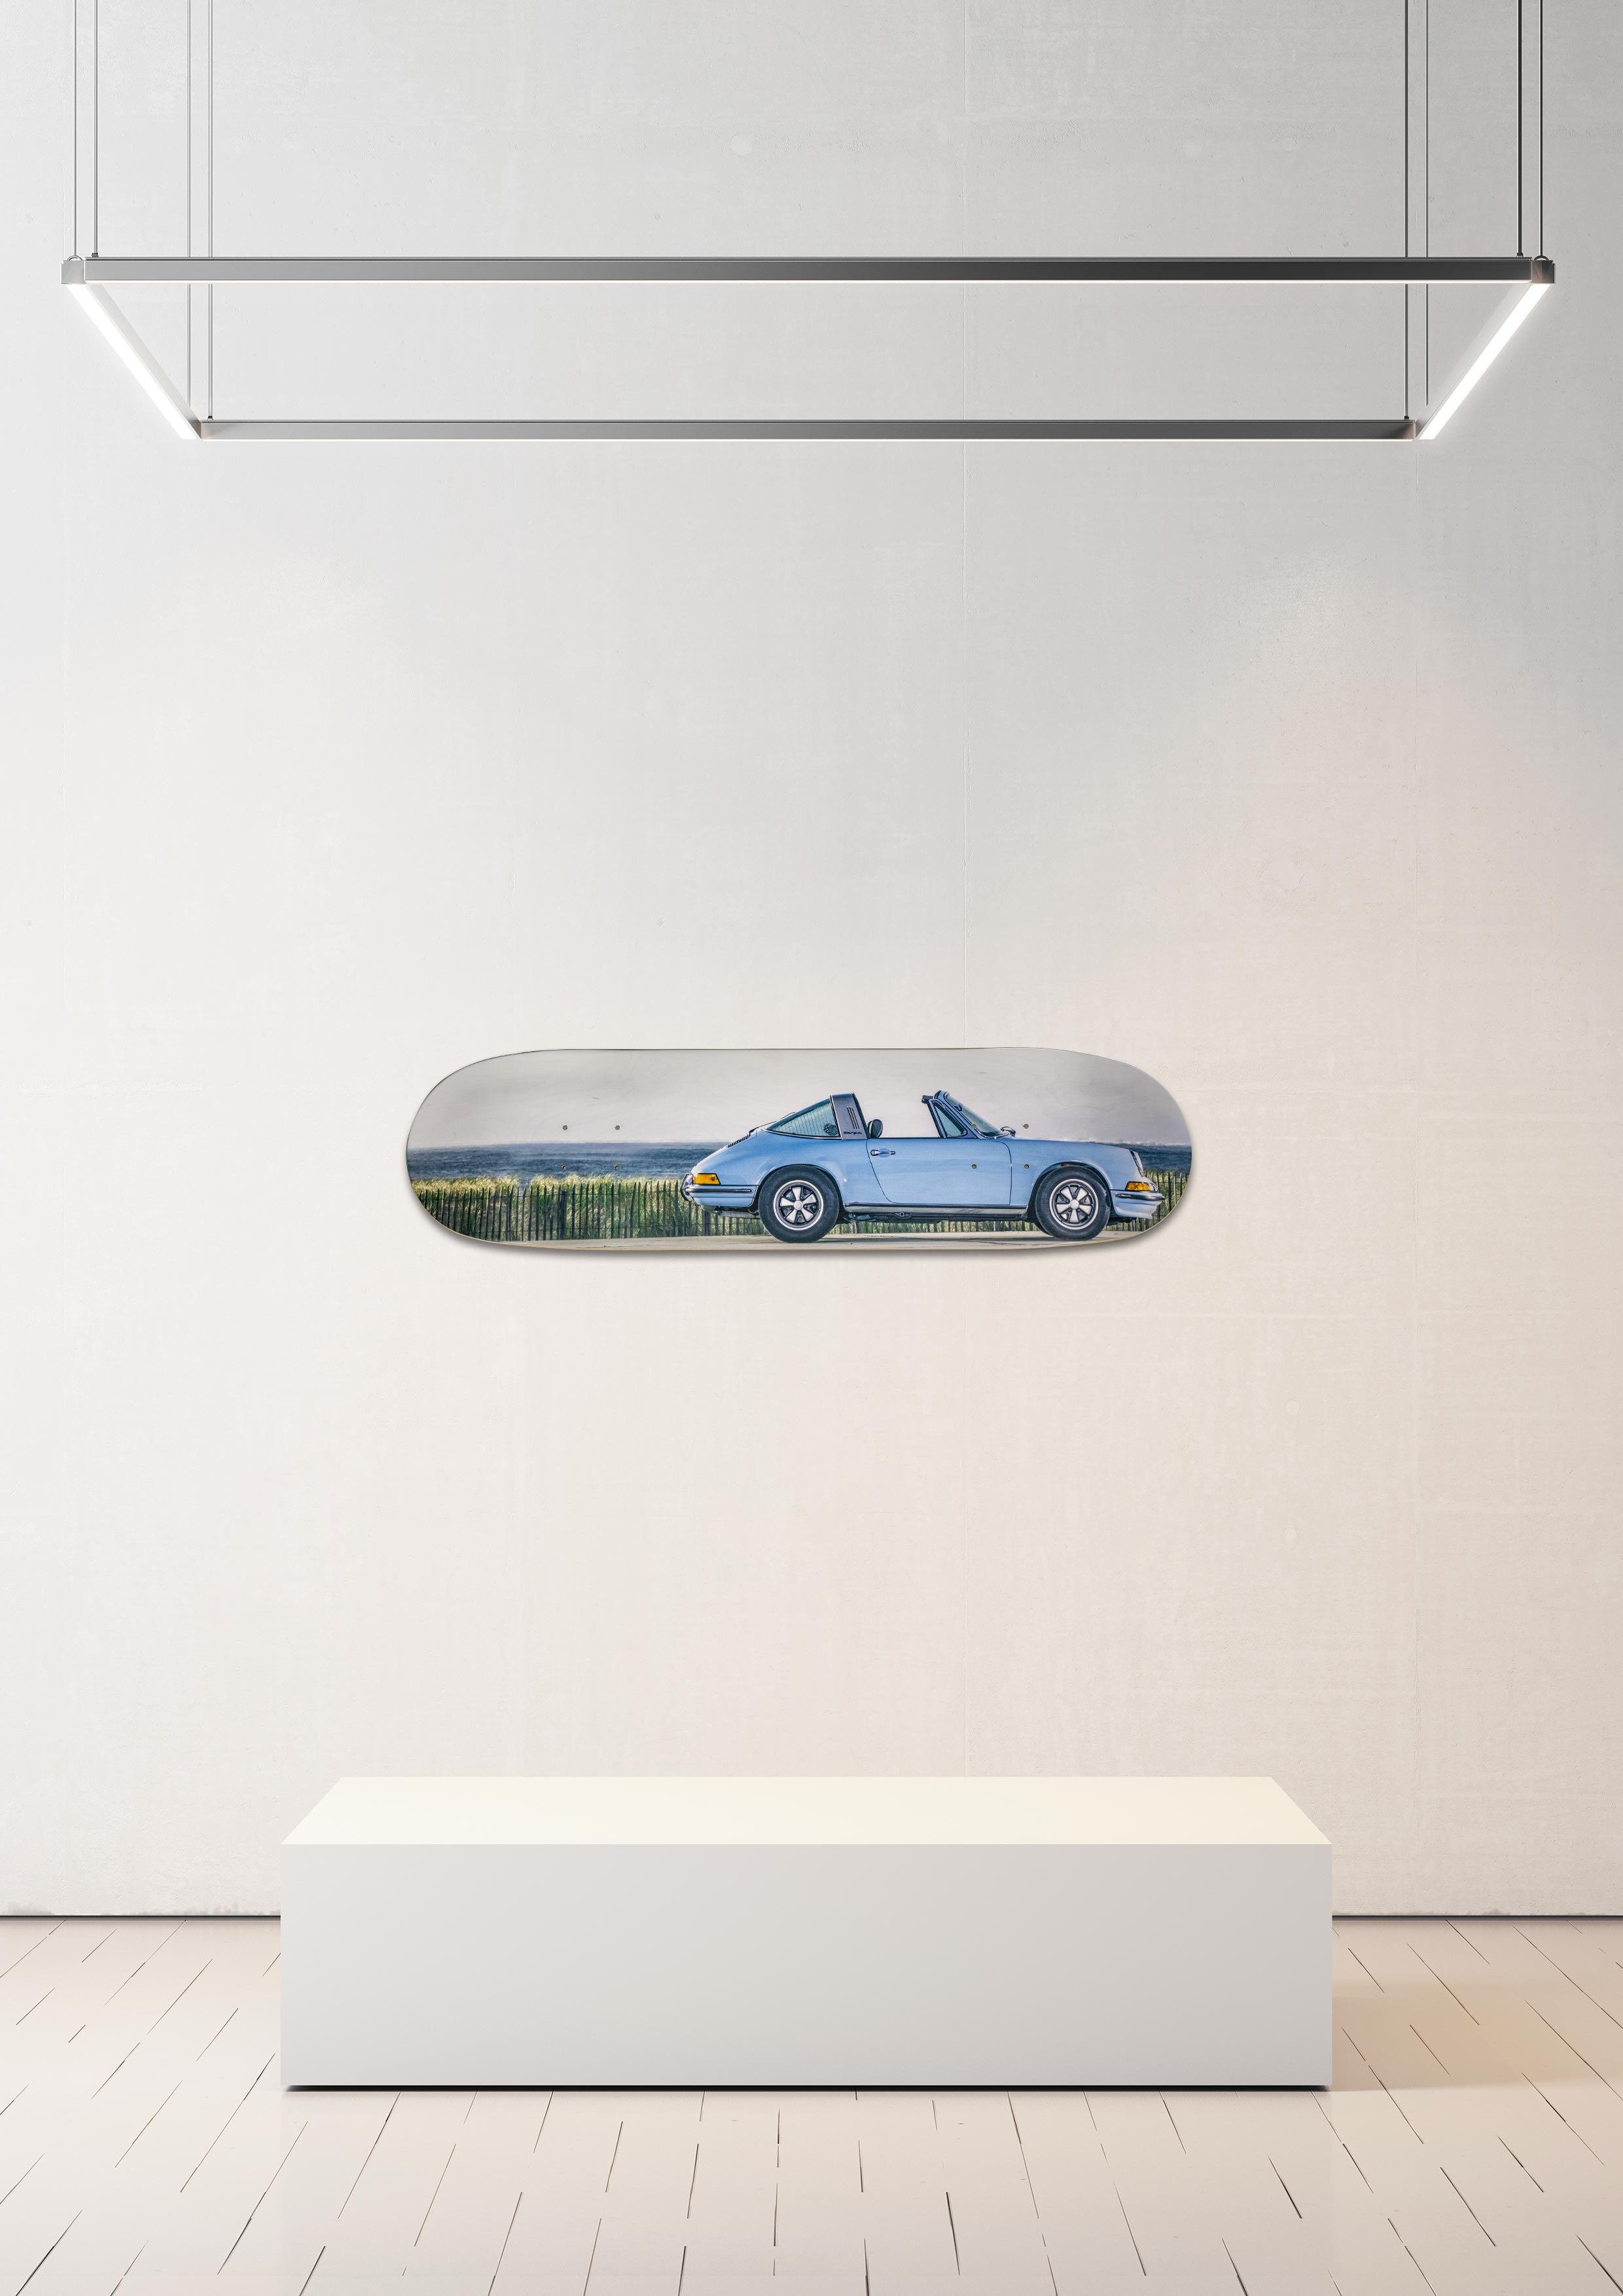 Wall skate board - very limited edition Porsche 911 Targa 2.4 S gulf blue - Serge Heitz